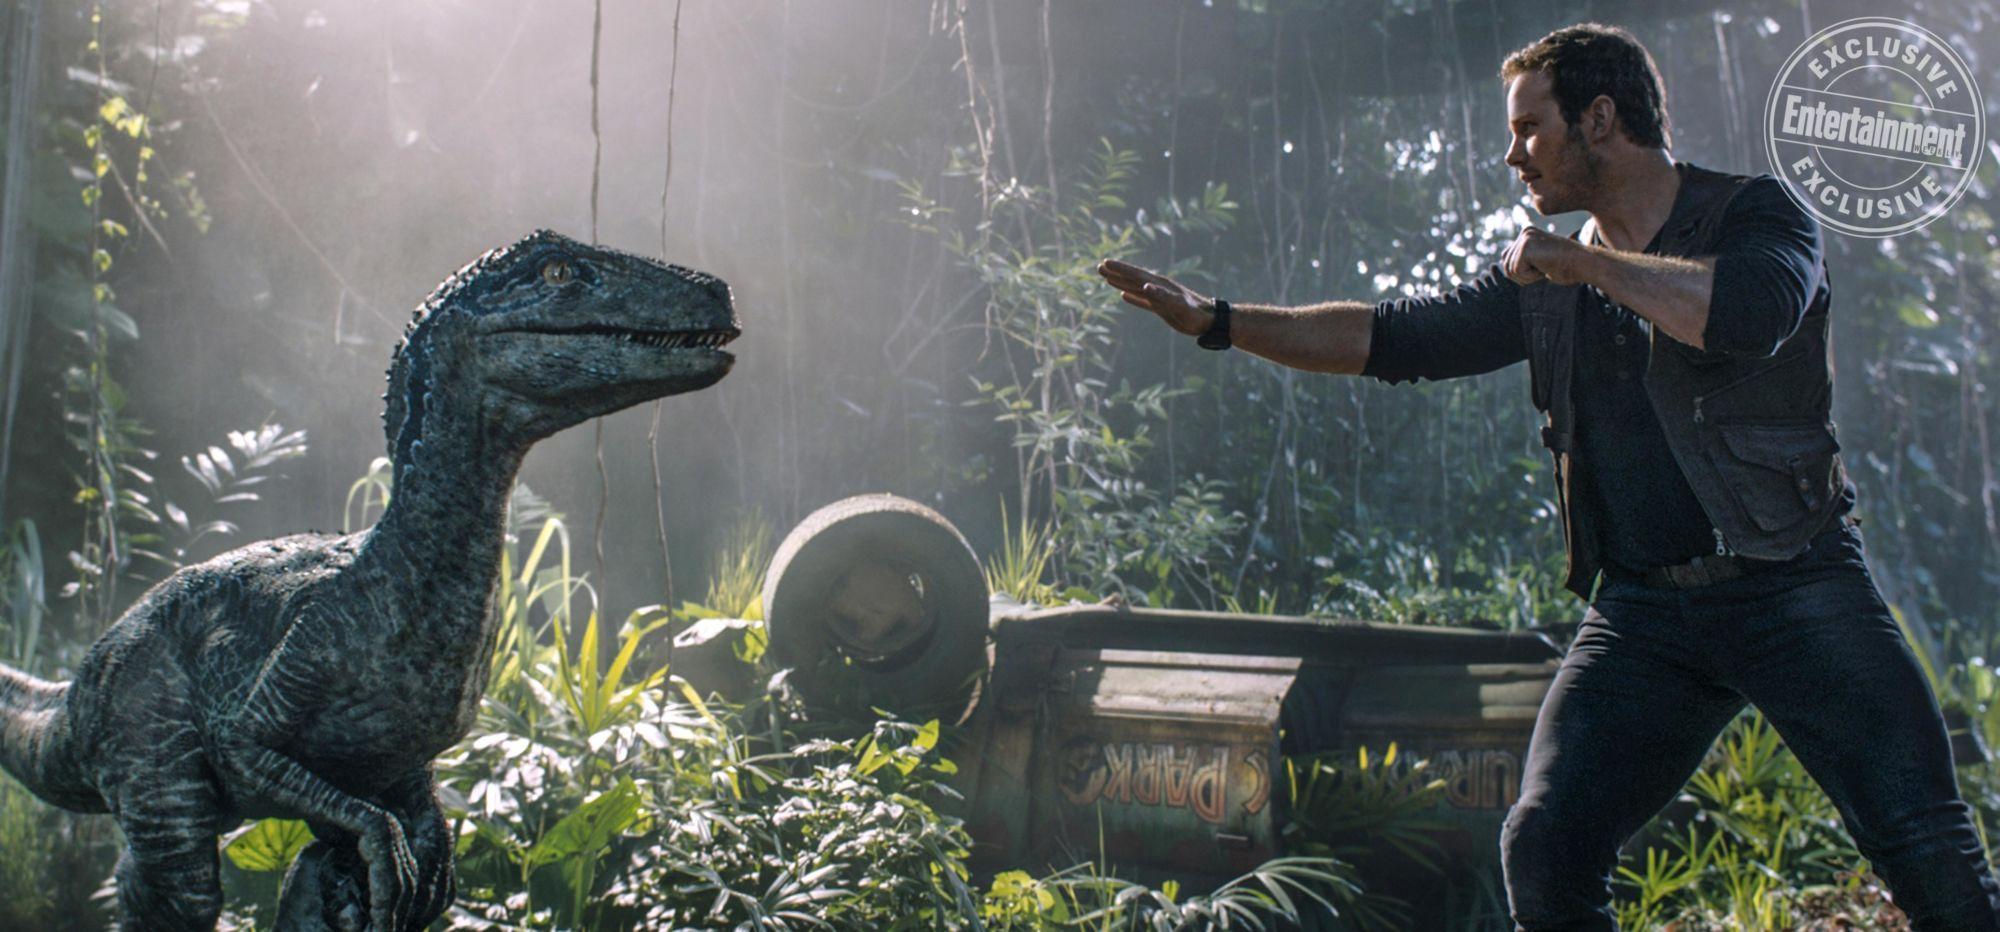 New Image from Jurassic World: Fallen Kingdom